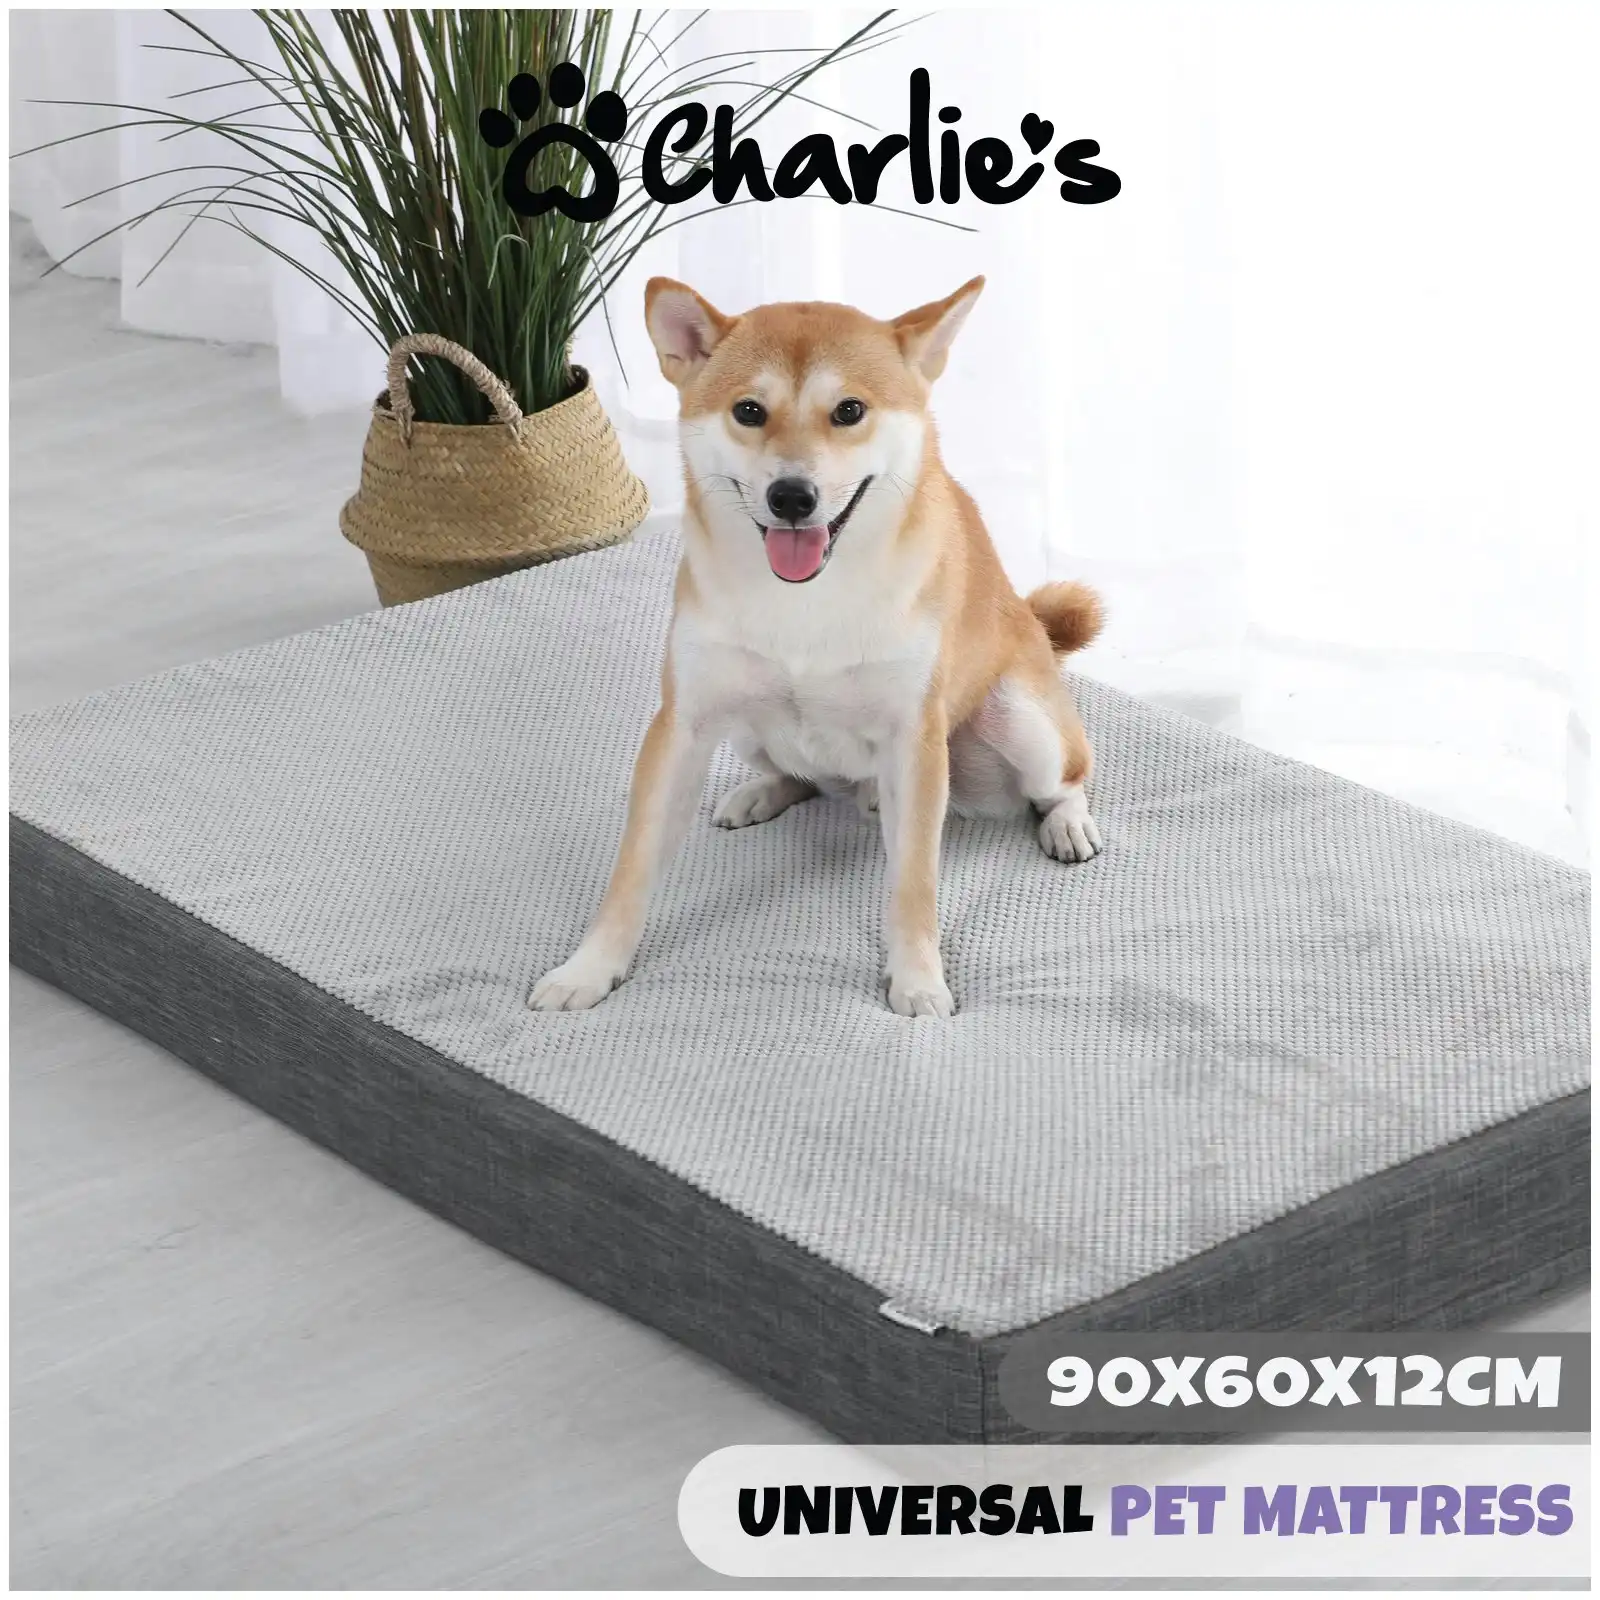 Charlie's Universal Pet Mattress Medium